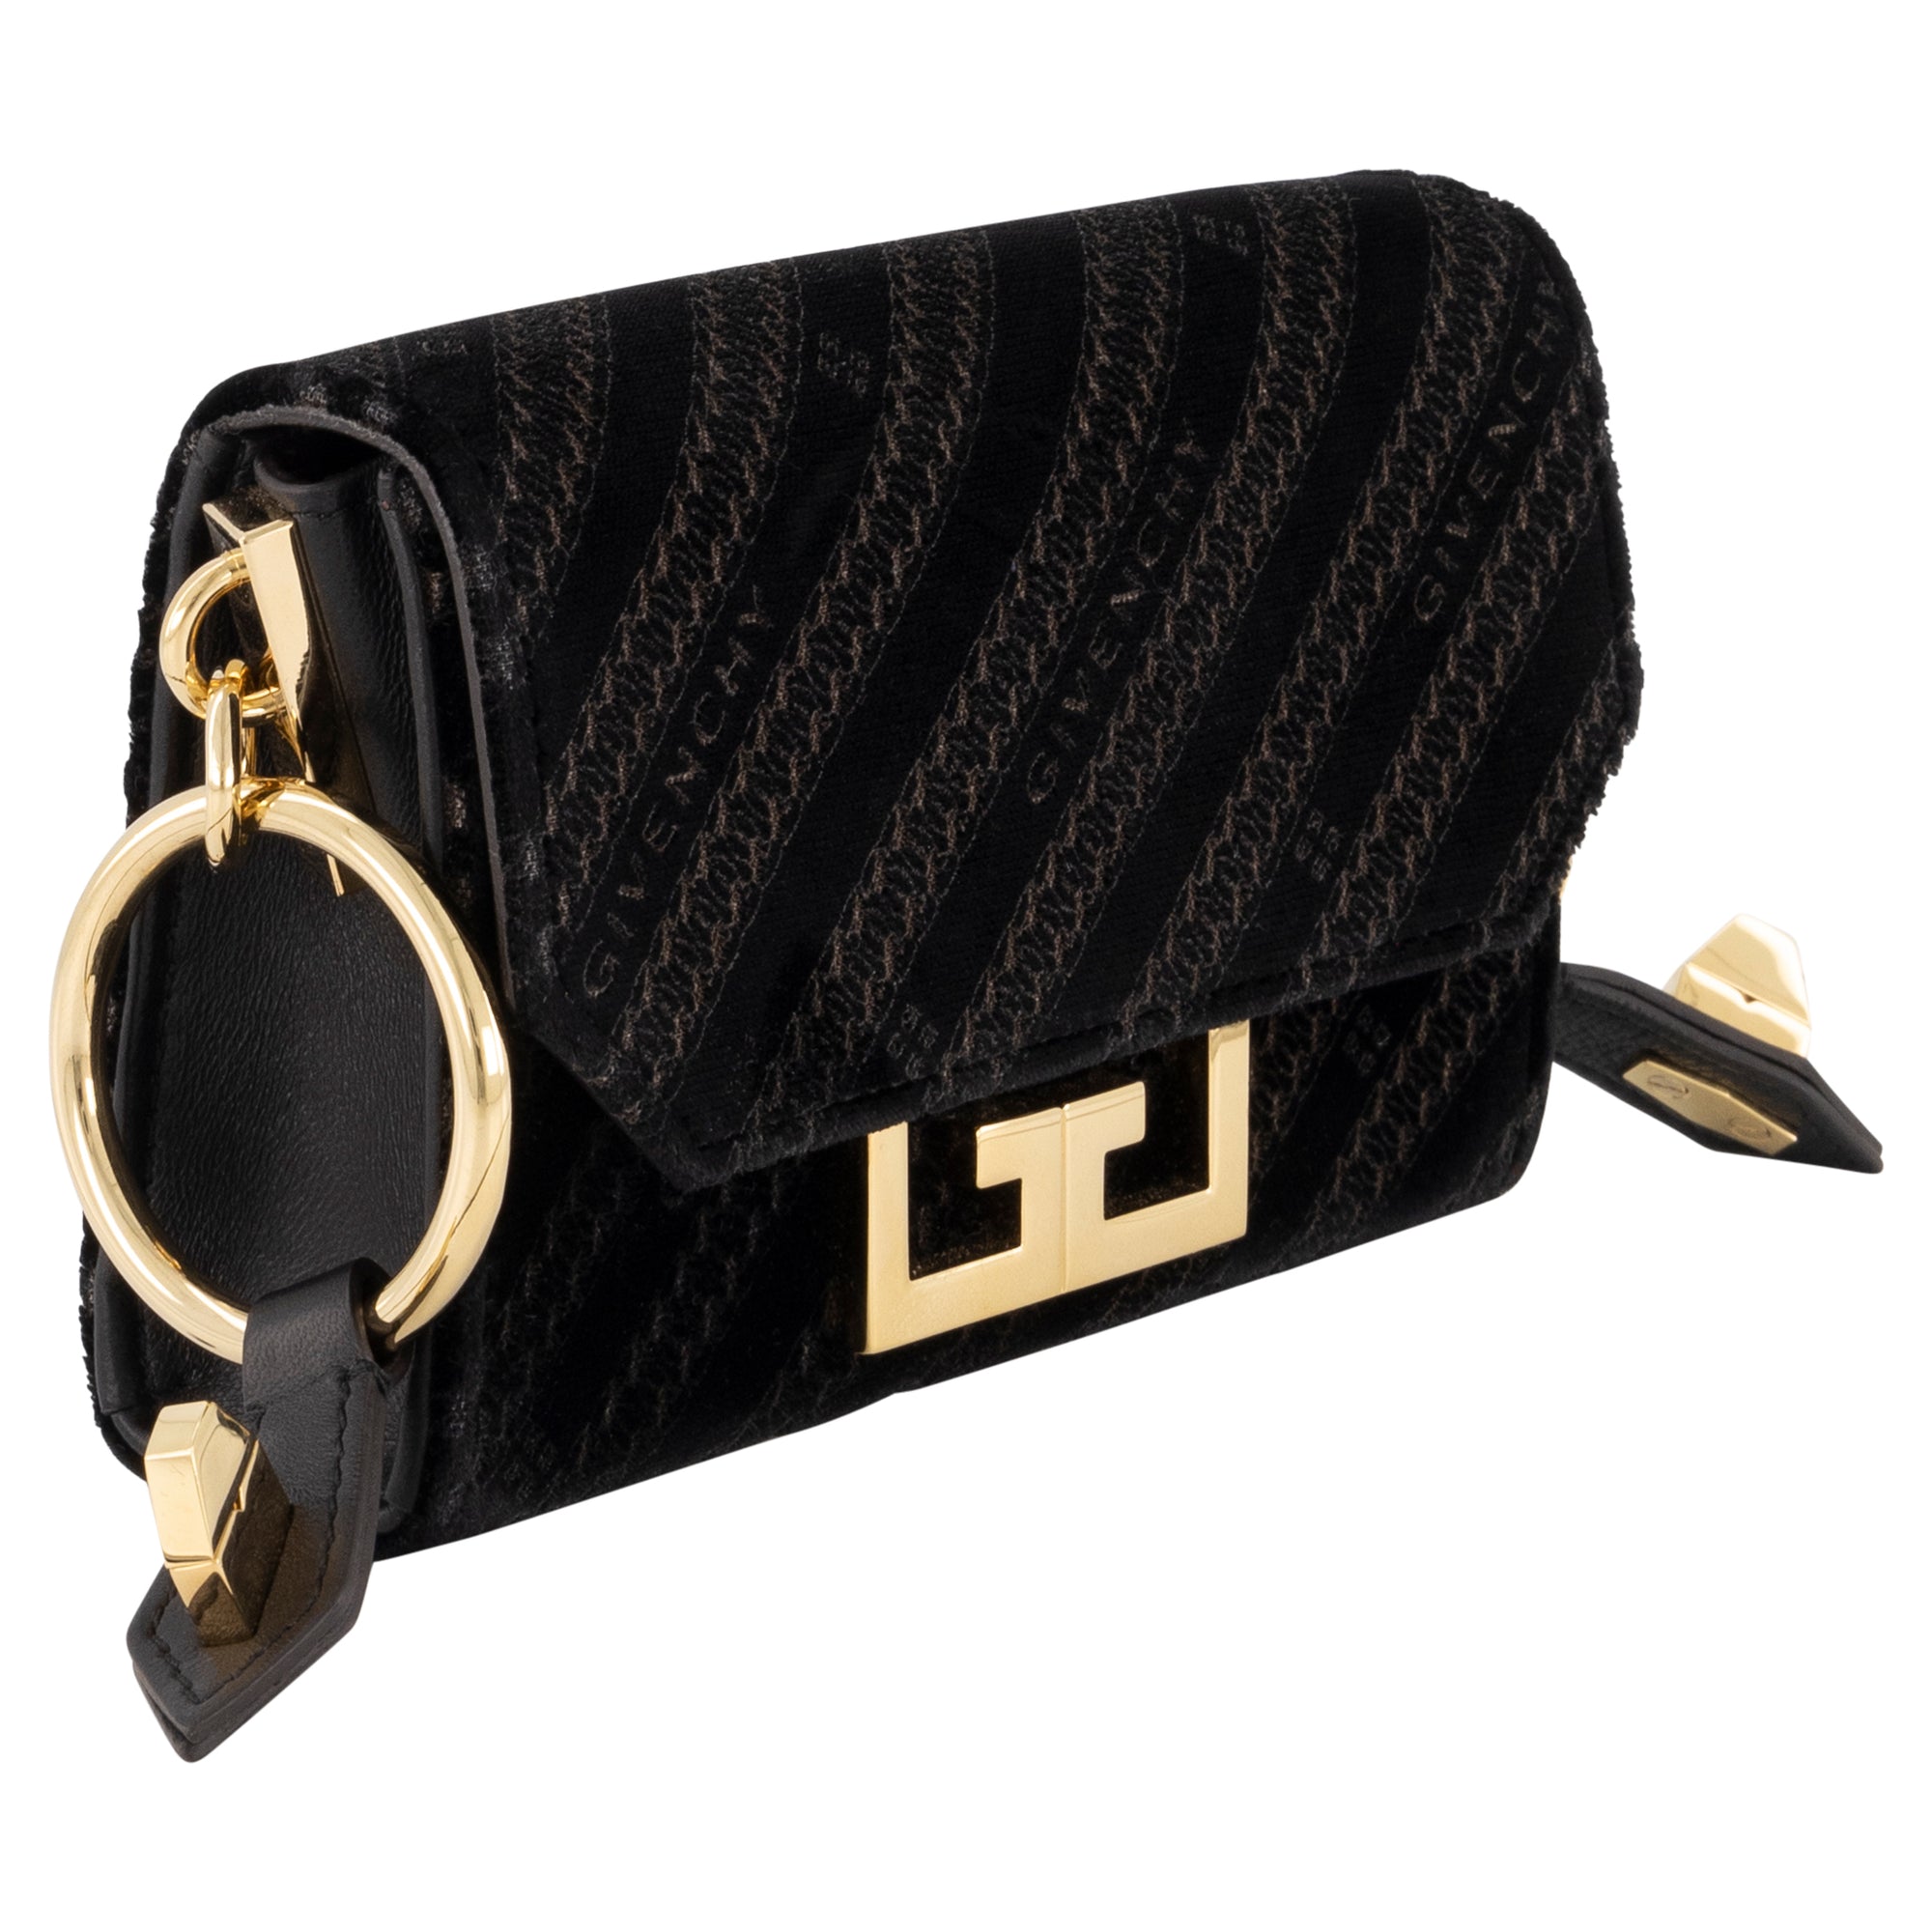 Givenchy belt bag with black strap and logo.